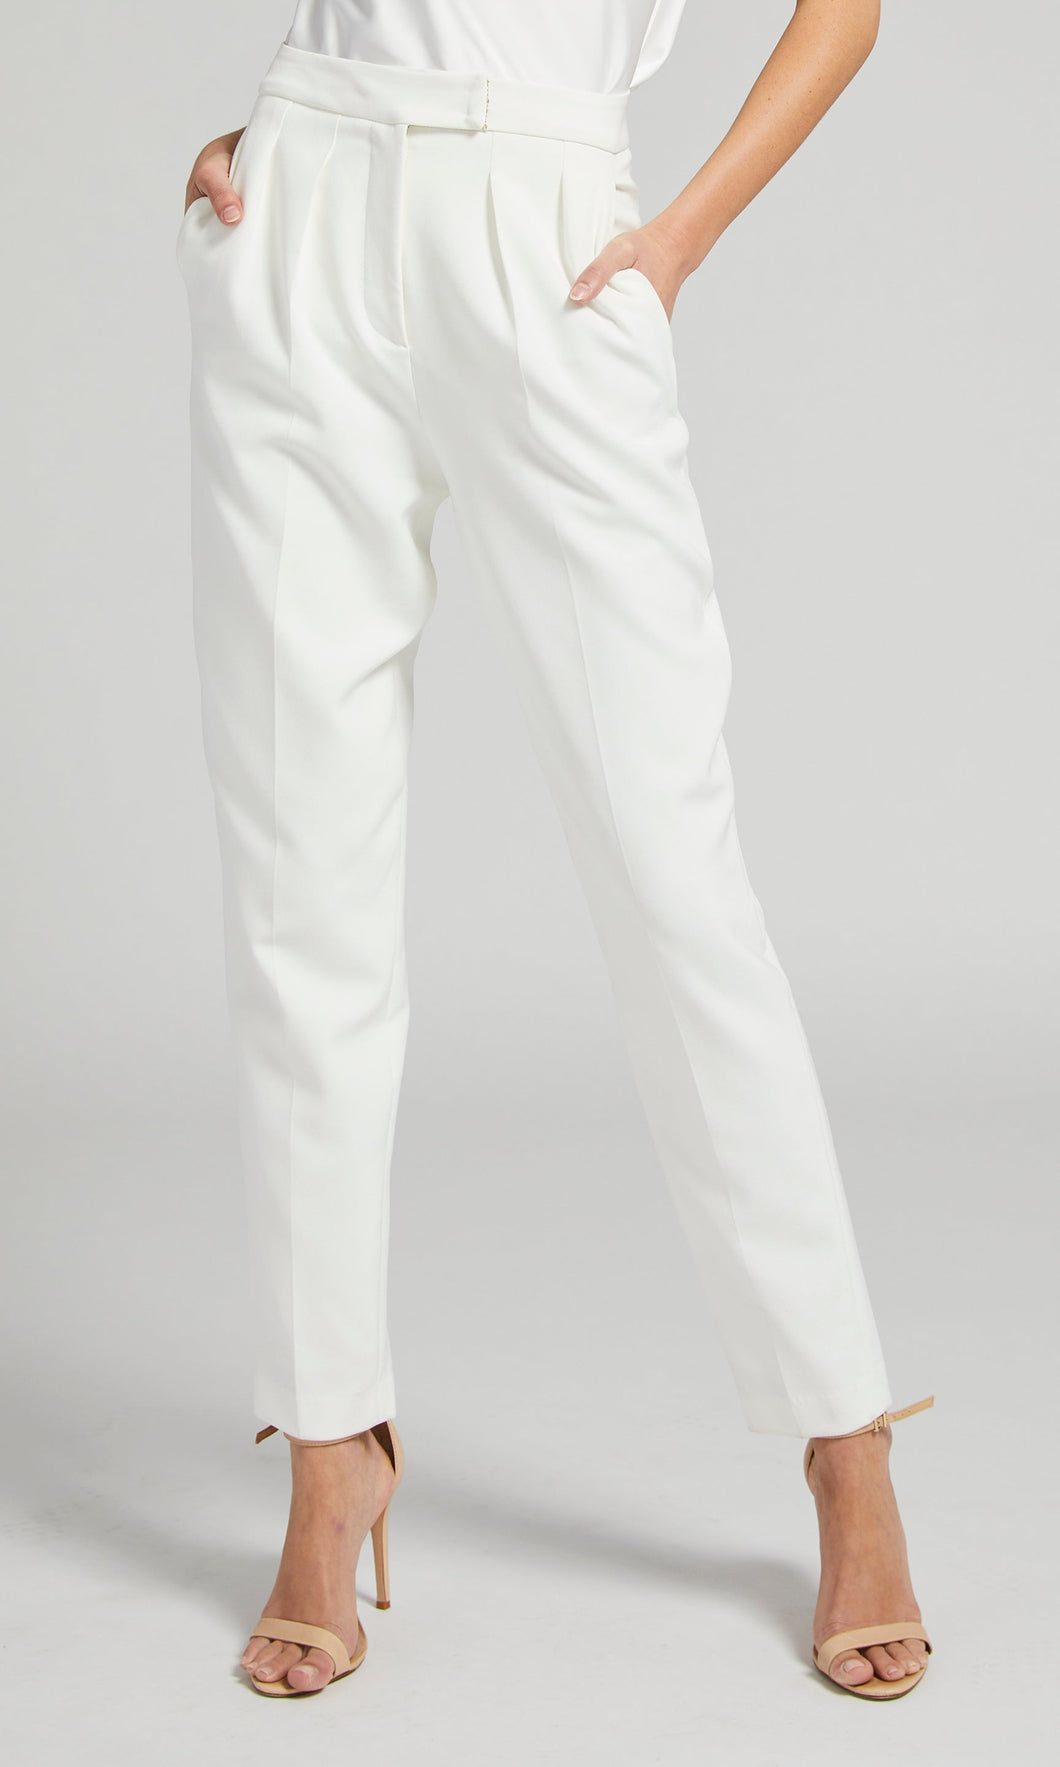 Kat White Crepe Pants with contrast Top Stitching Pants – Label AMARI